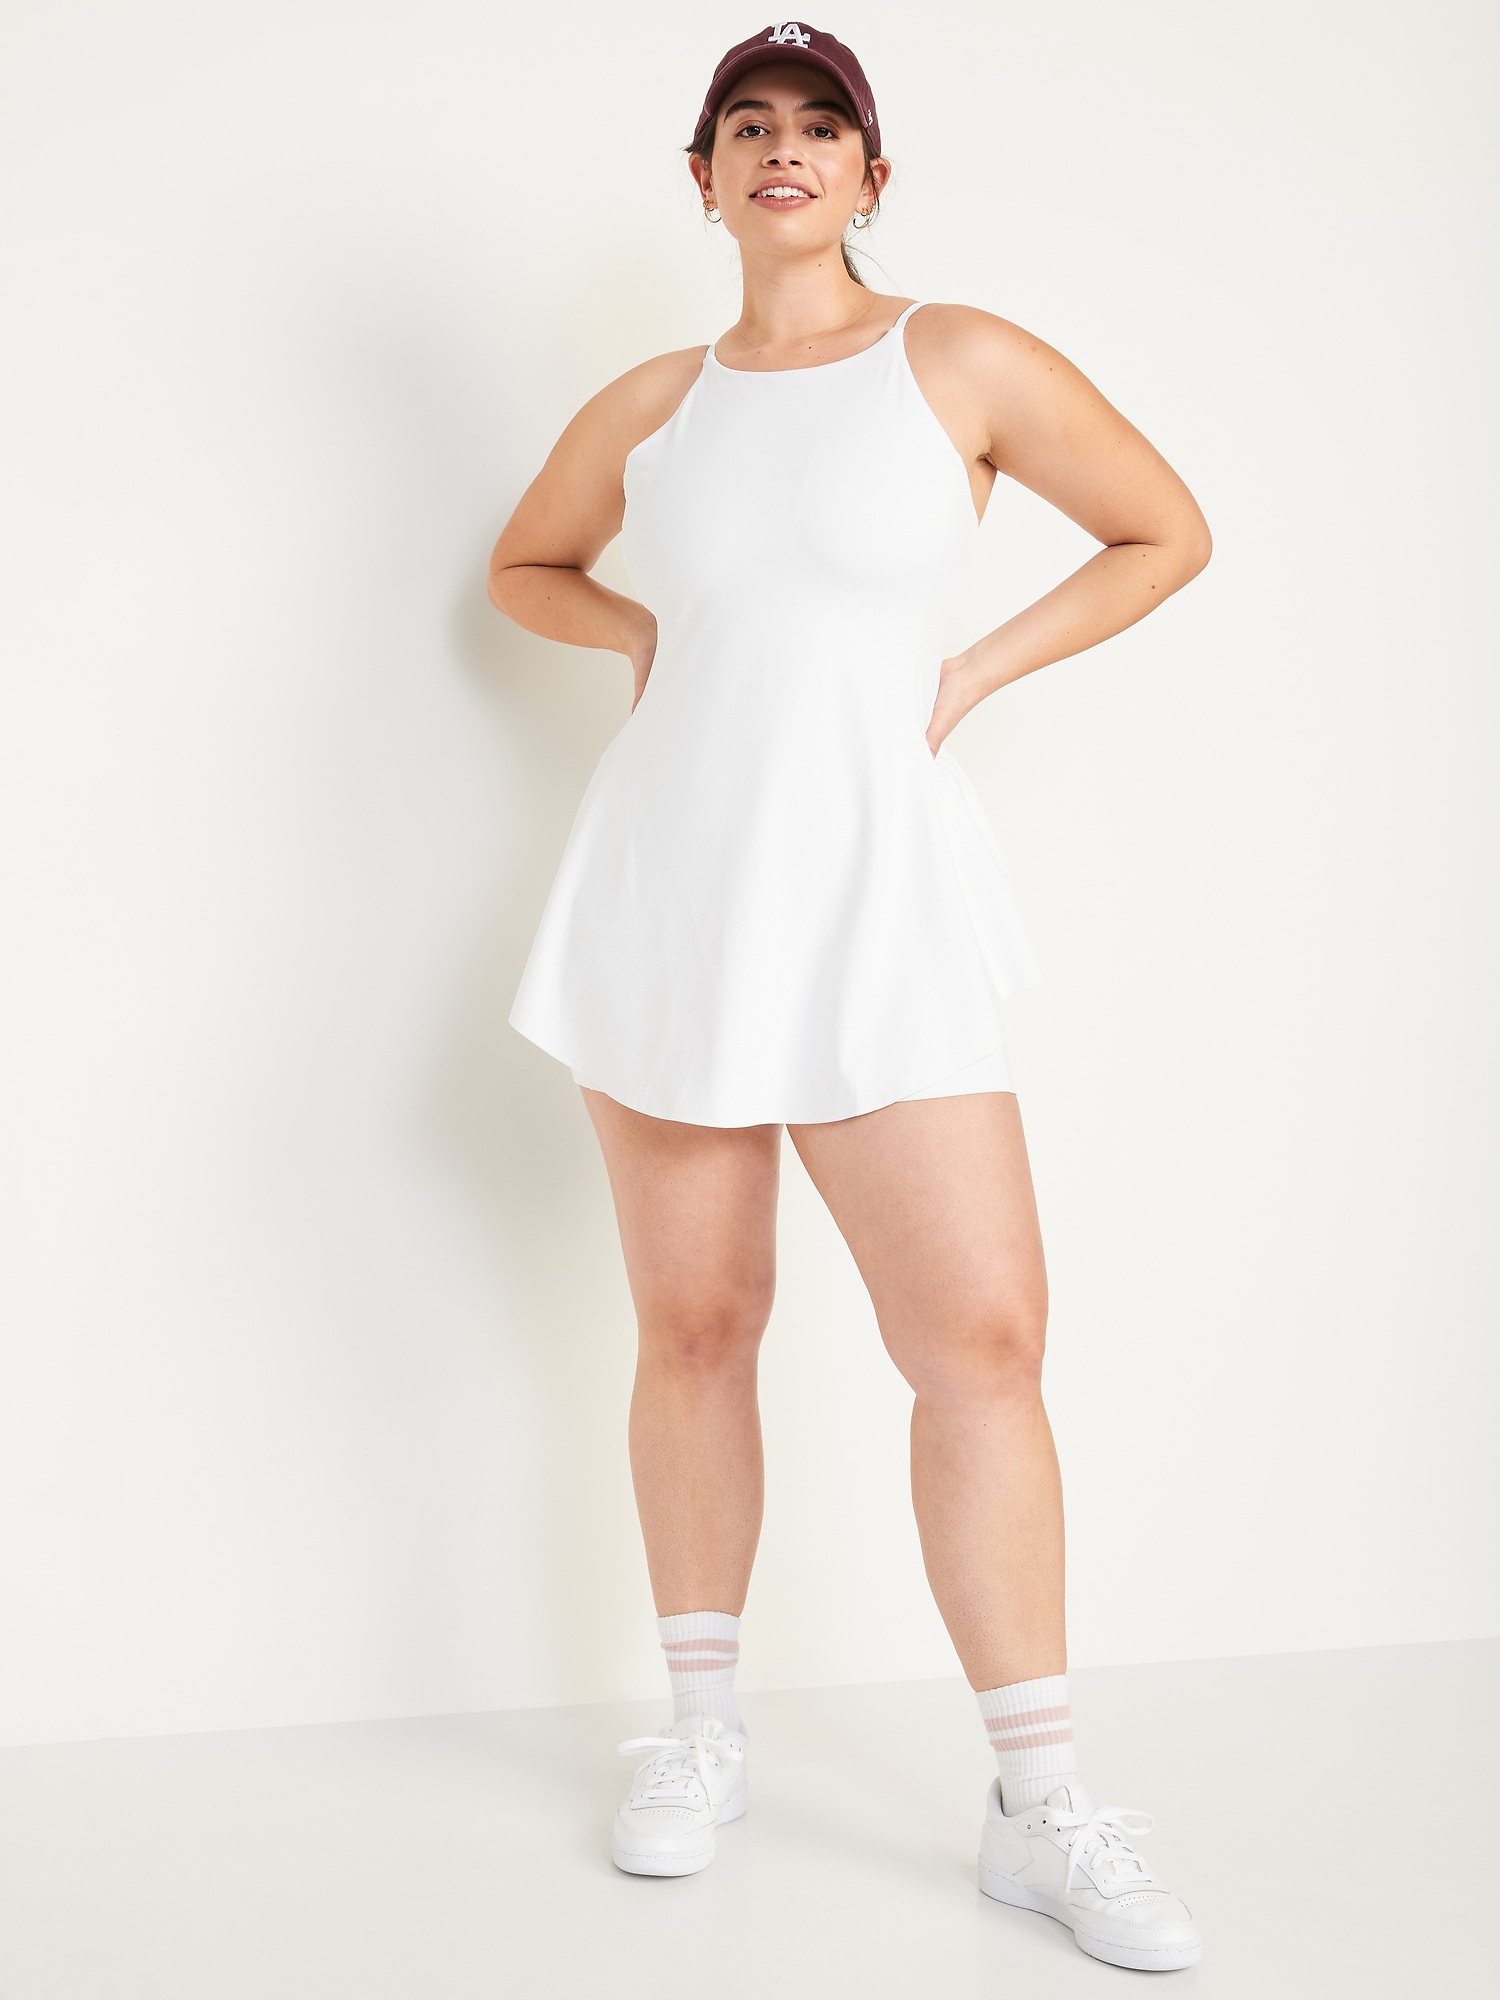 Sleeveless PowerSoft Performance Built-In Shorts Dress for Girls